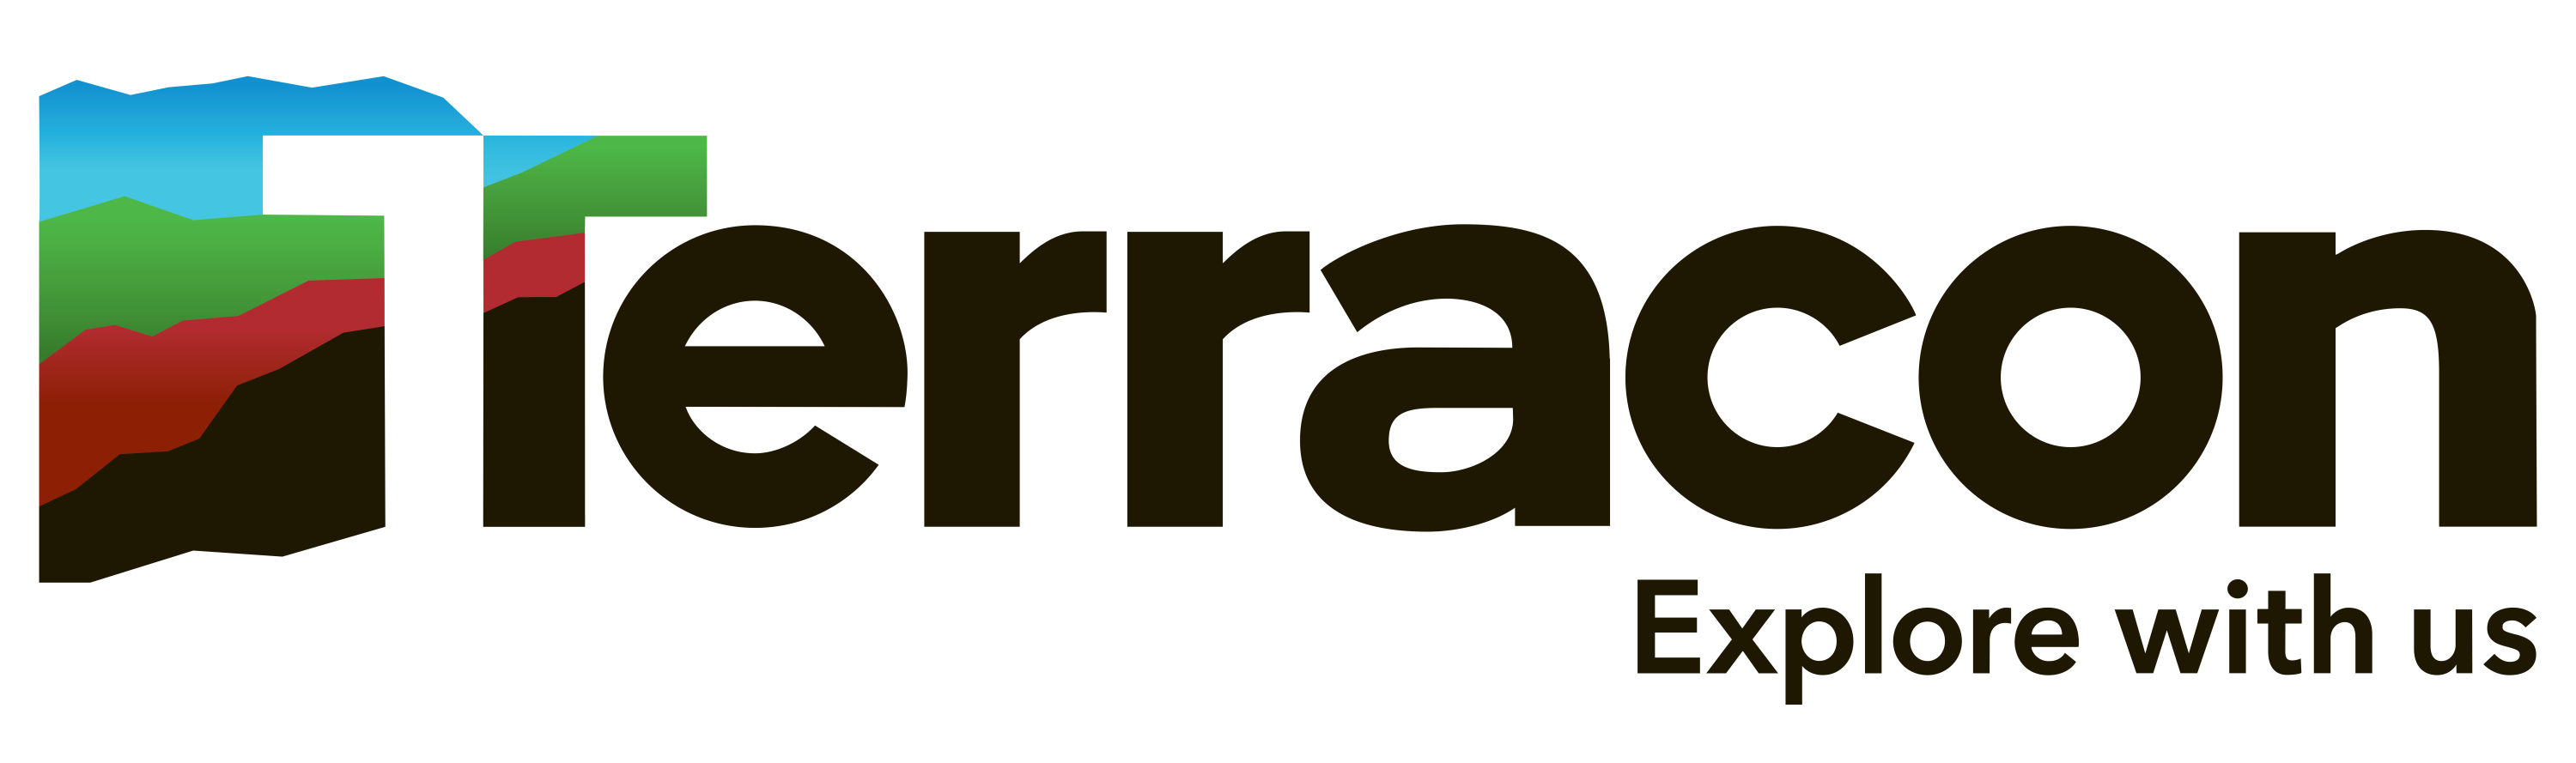 Main Logo for Terracon Consultants, Inc.